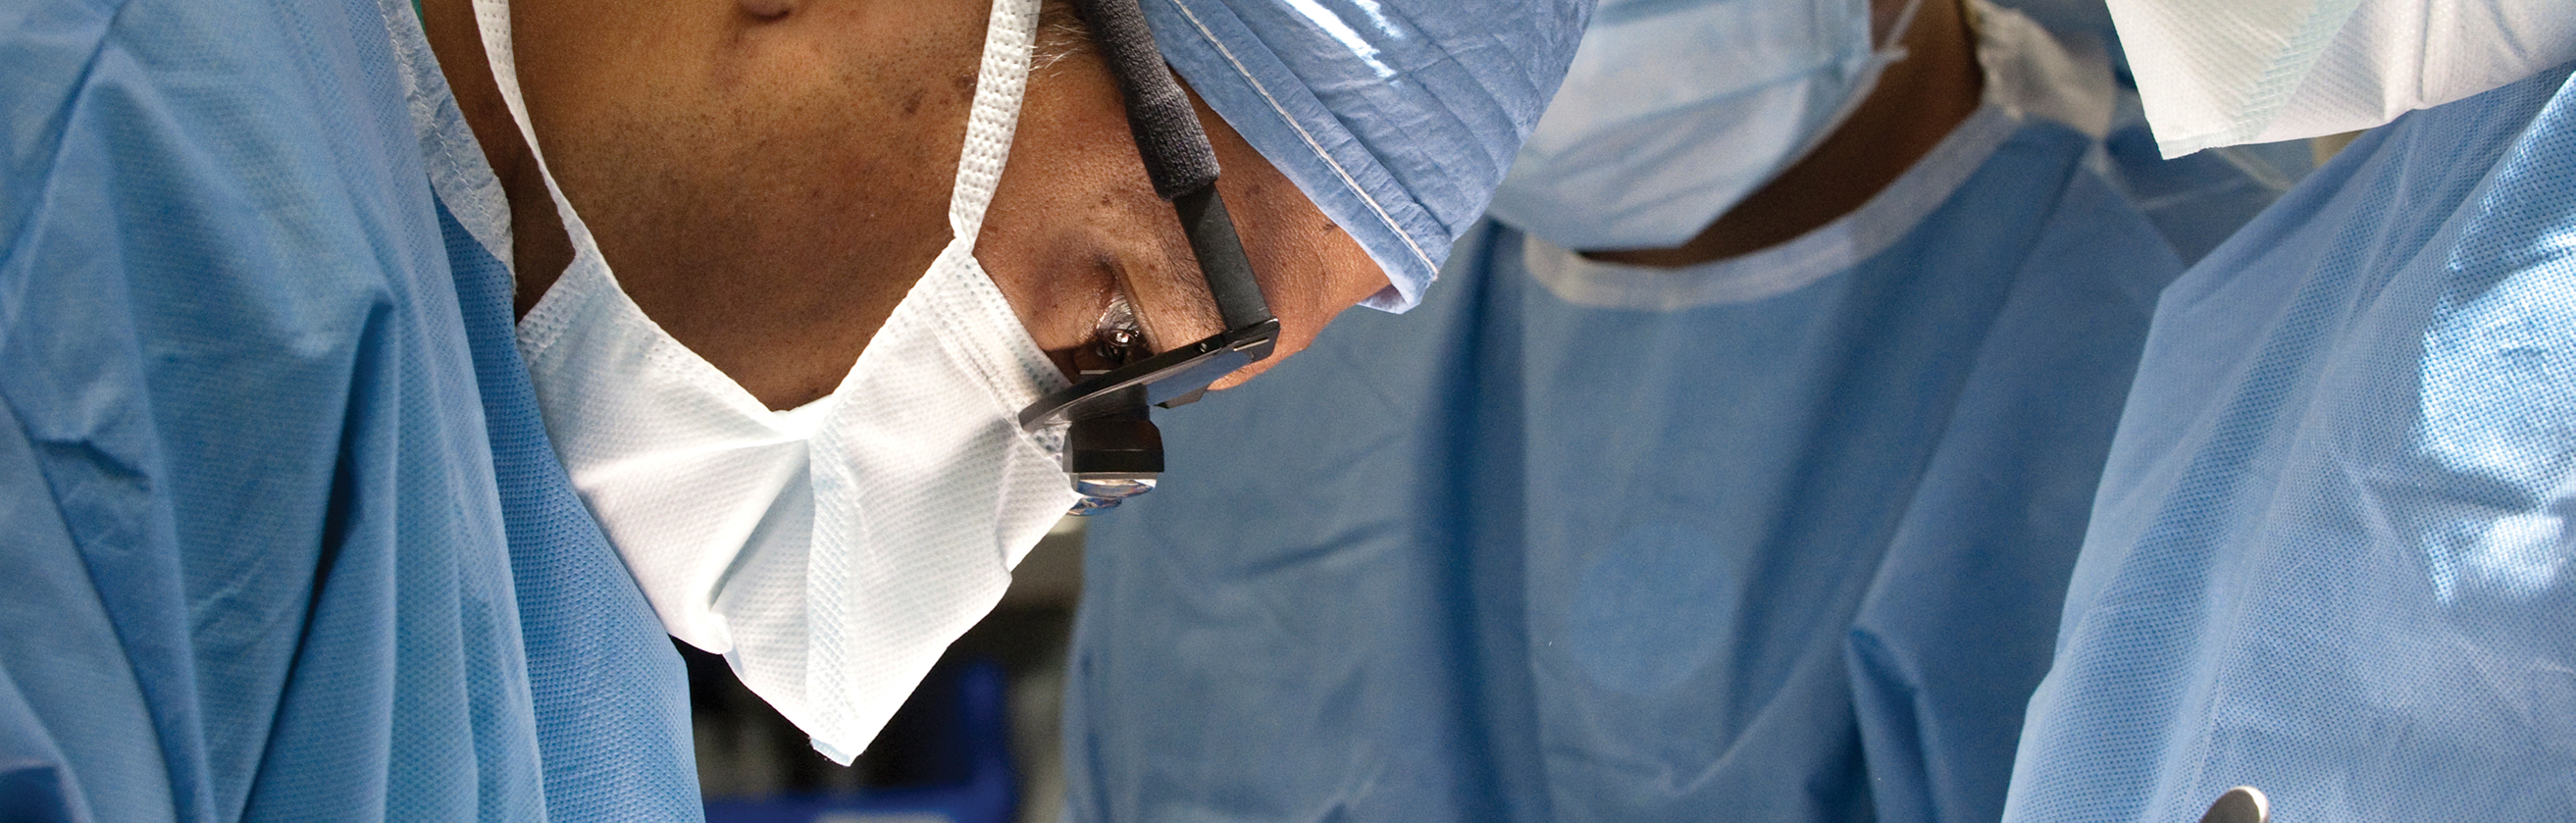 Dr. Sandip Kapur performing surgery